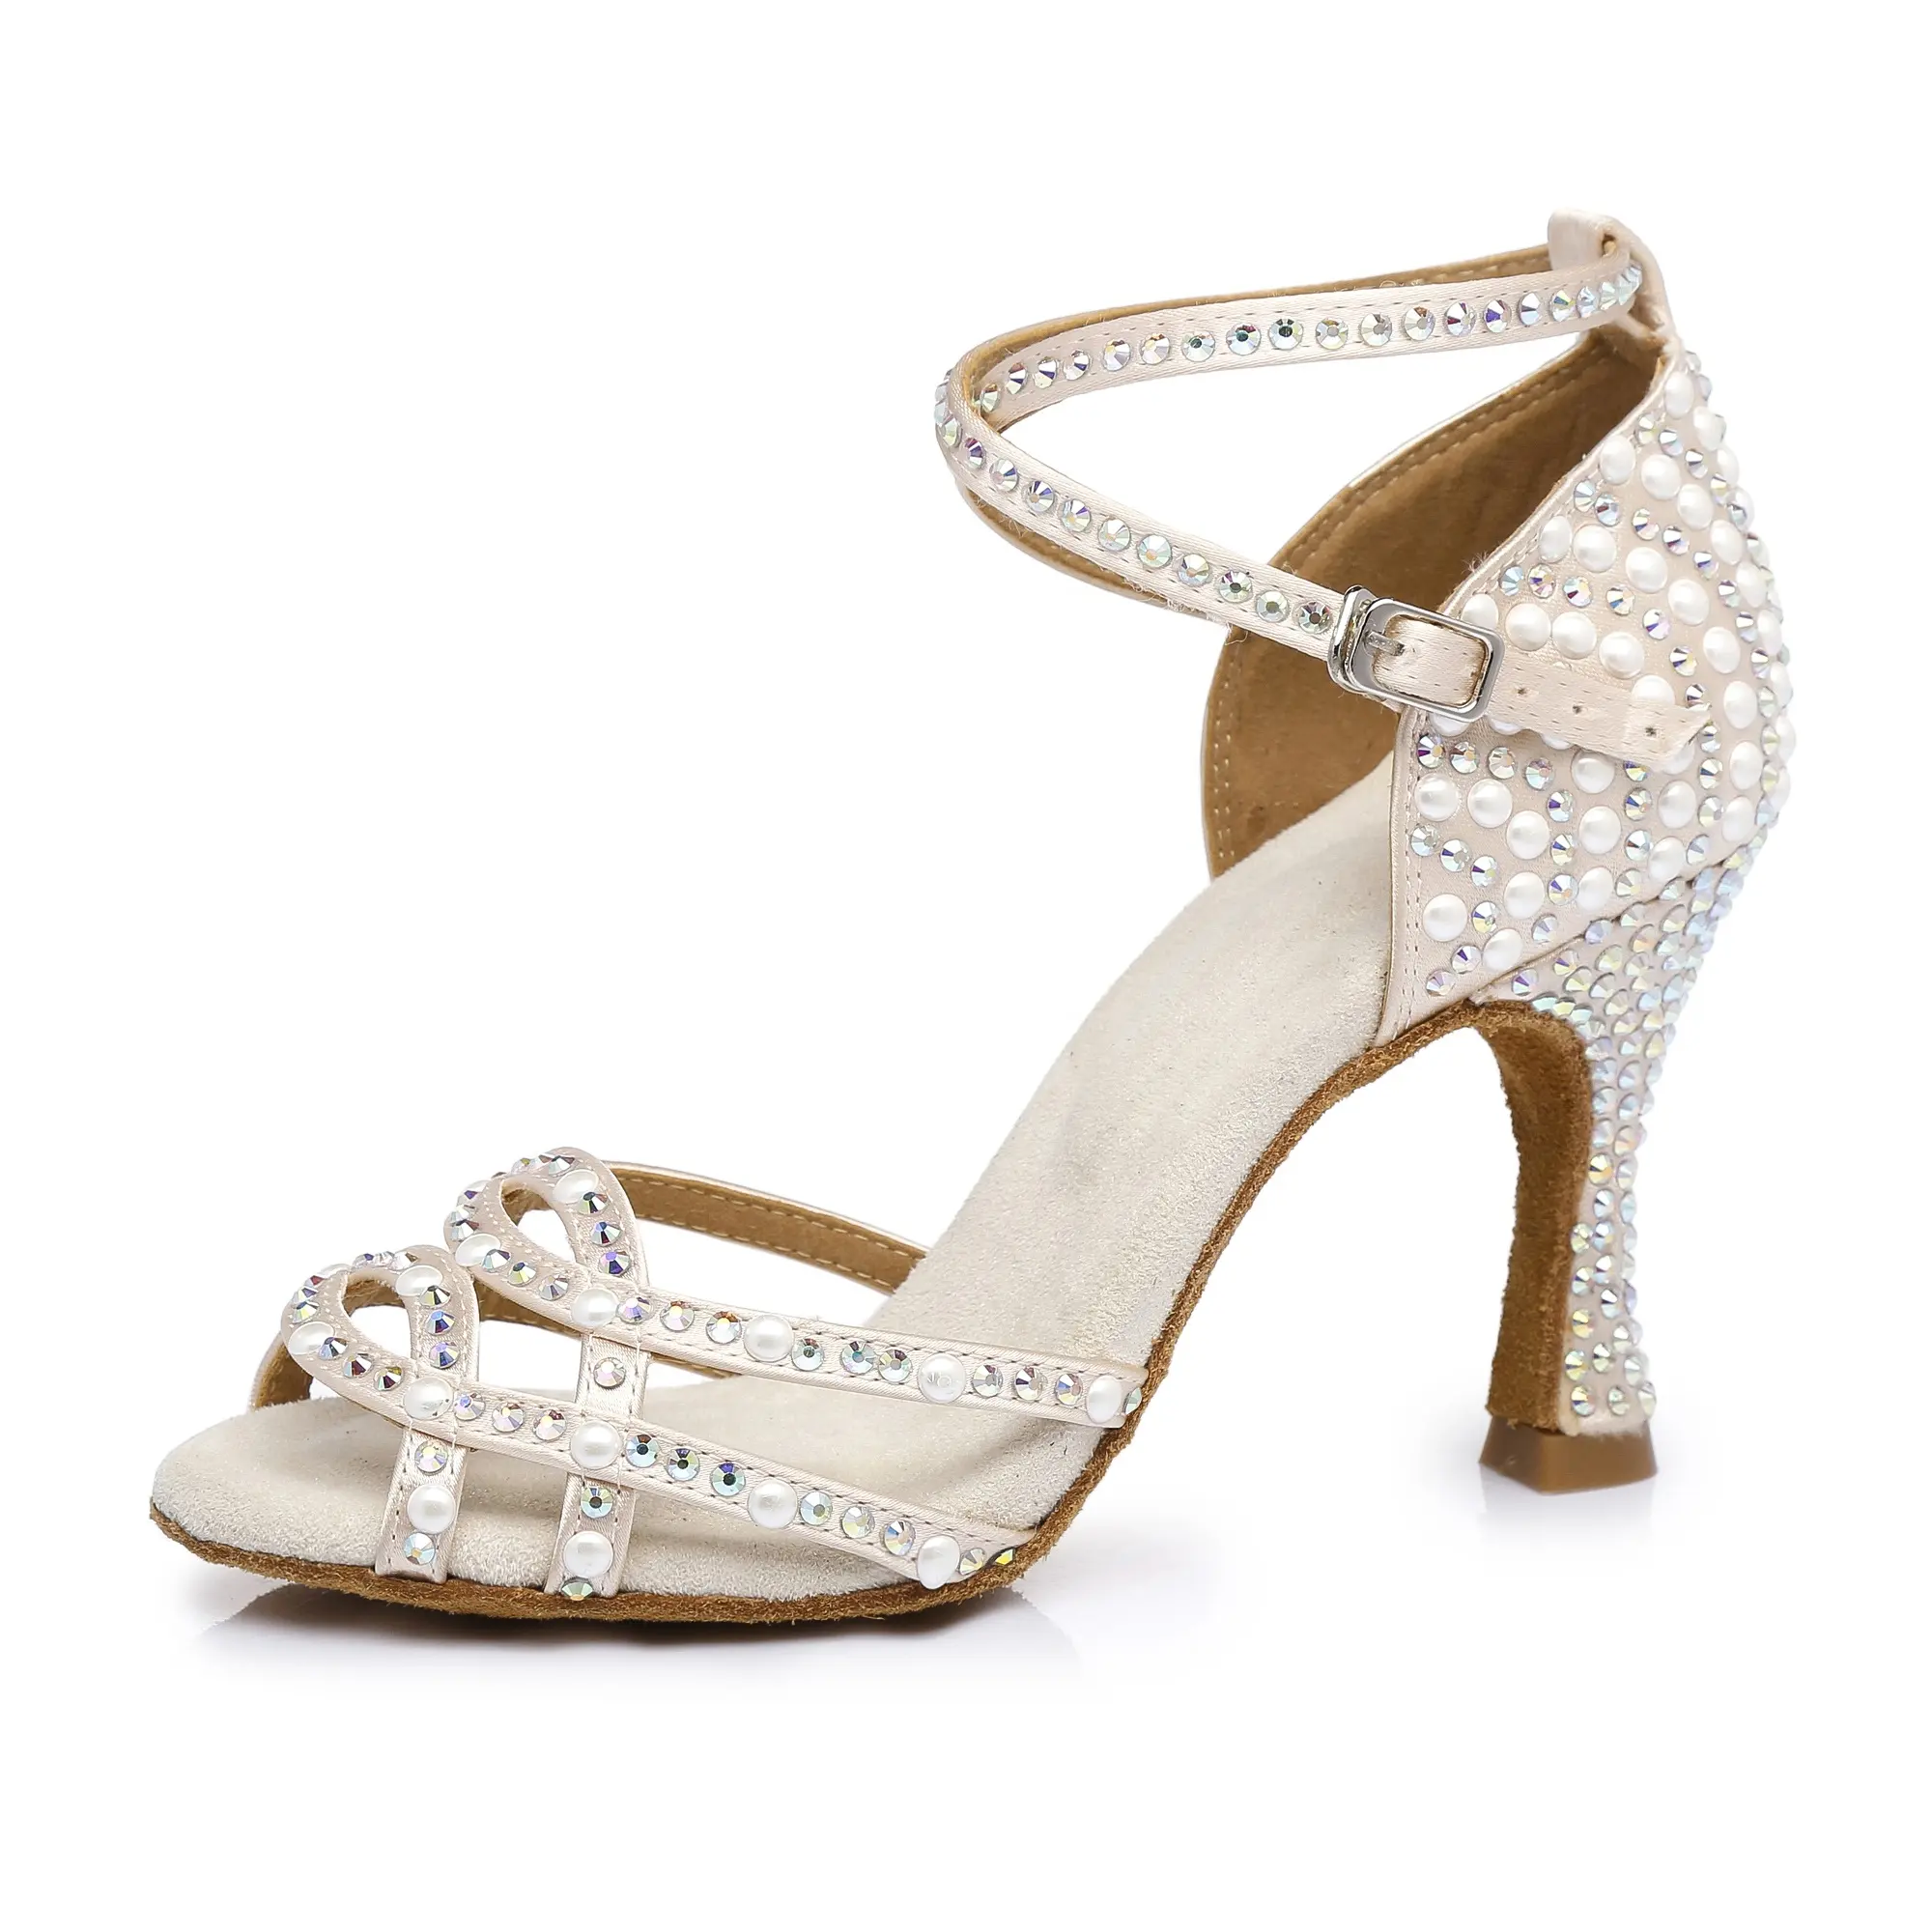 Latest model L379 Women's High Heel satin crystal Latin Dance Shoes